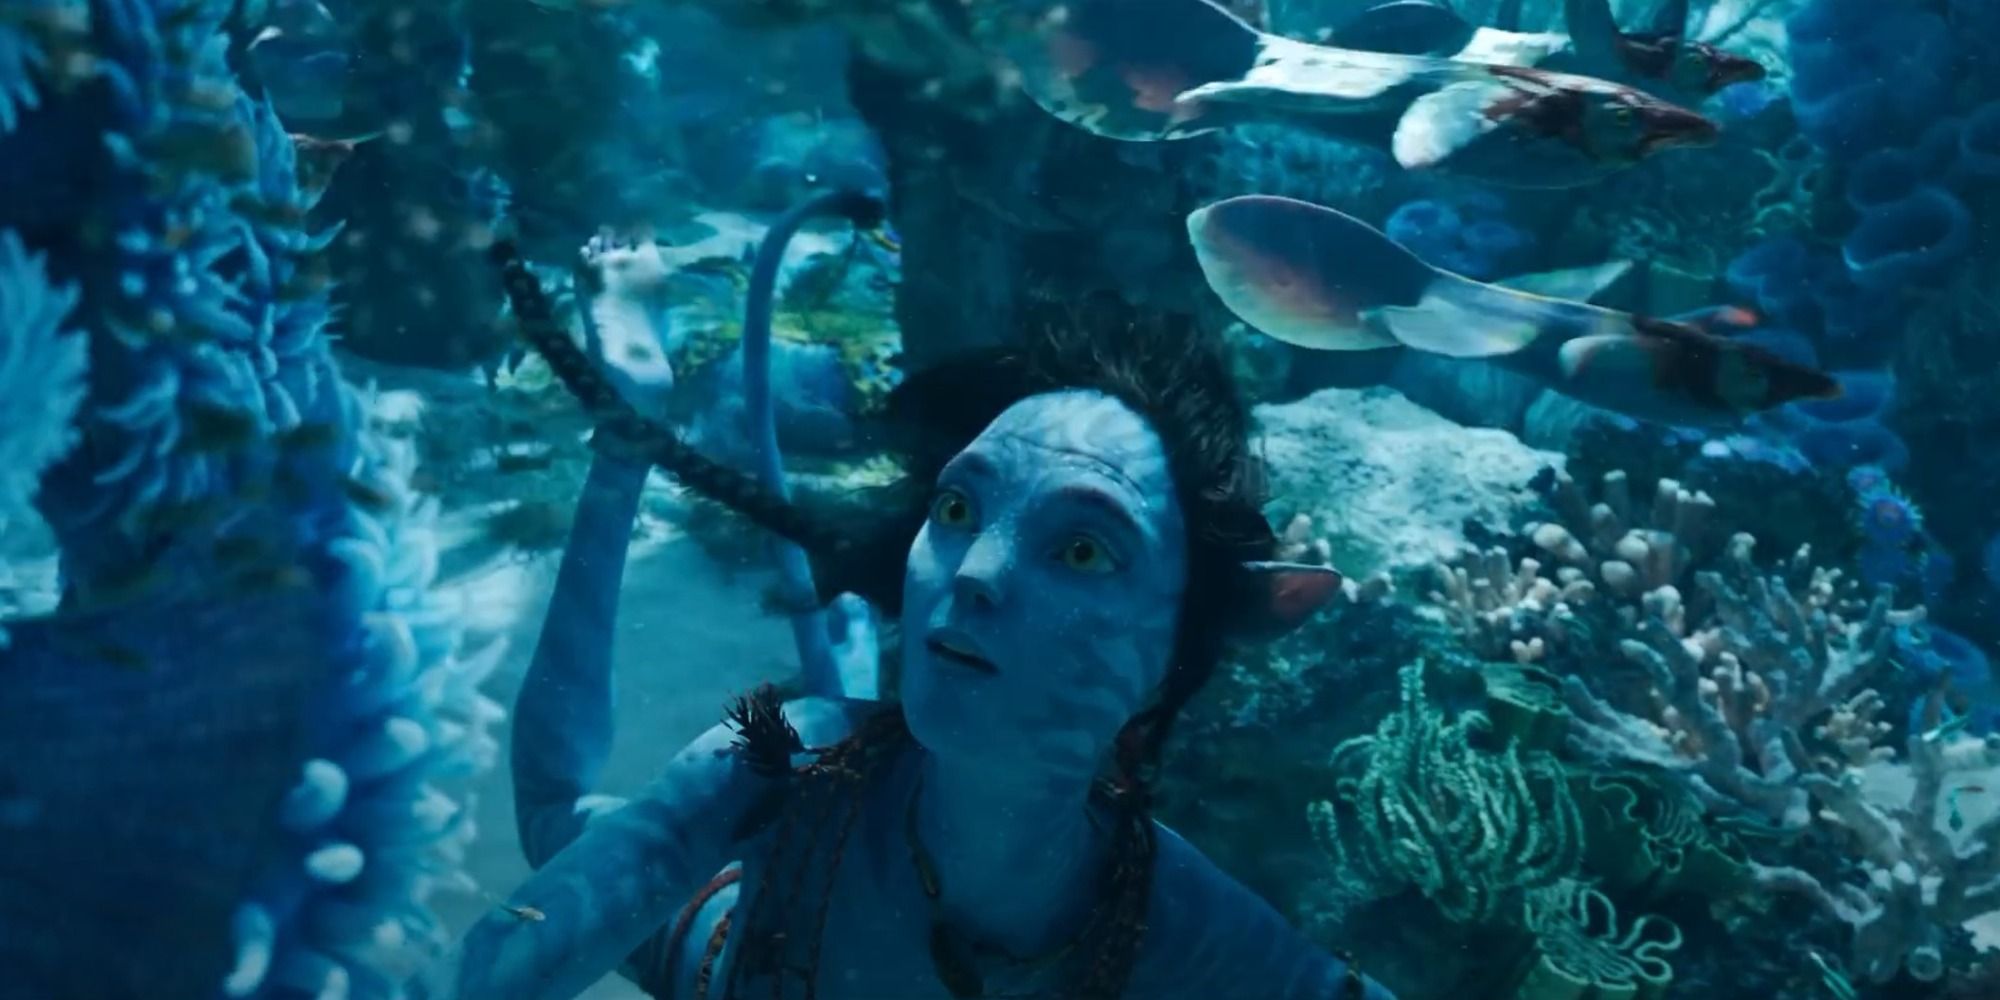 Na'vi swimming in water Avatar 2 trailer